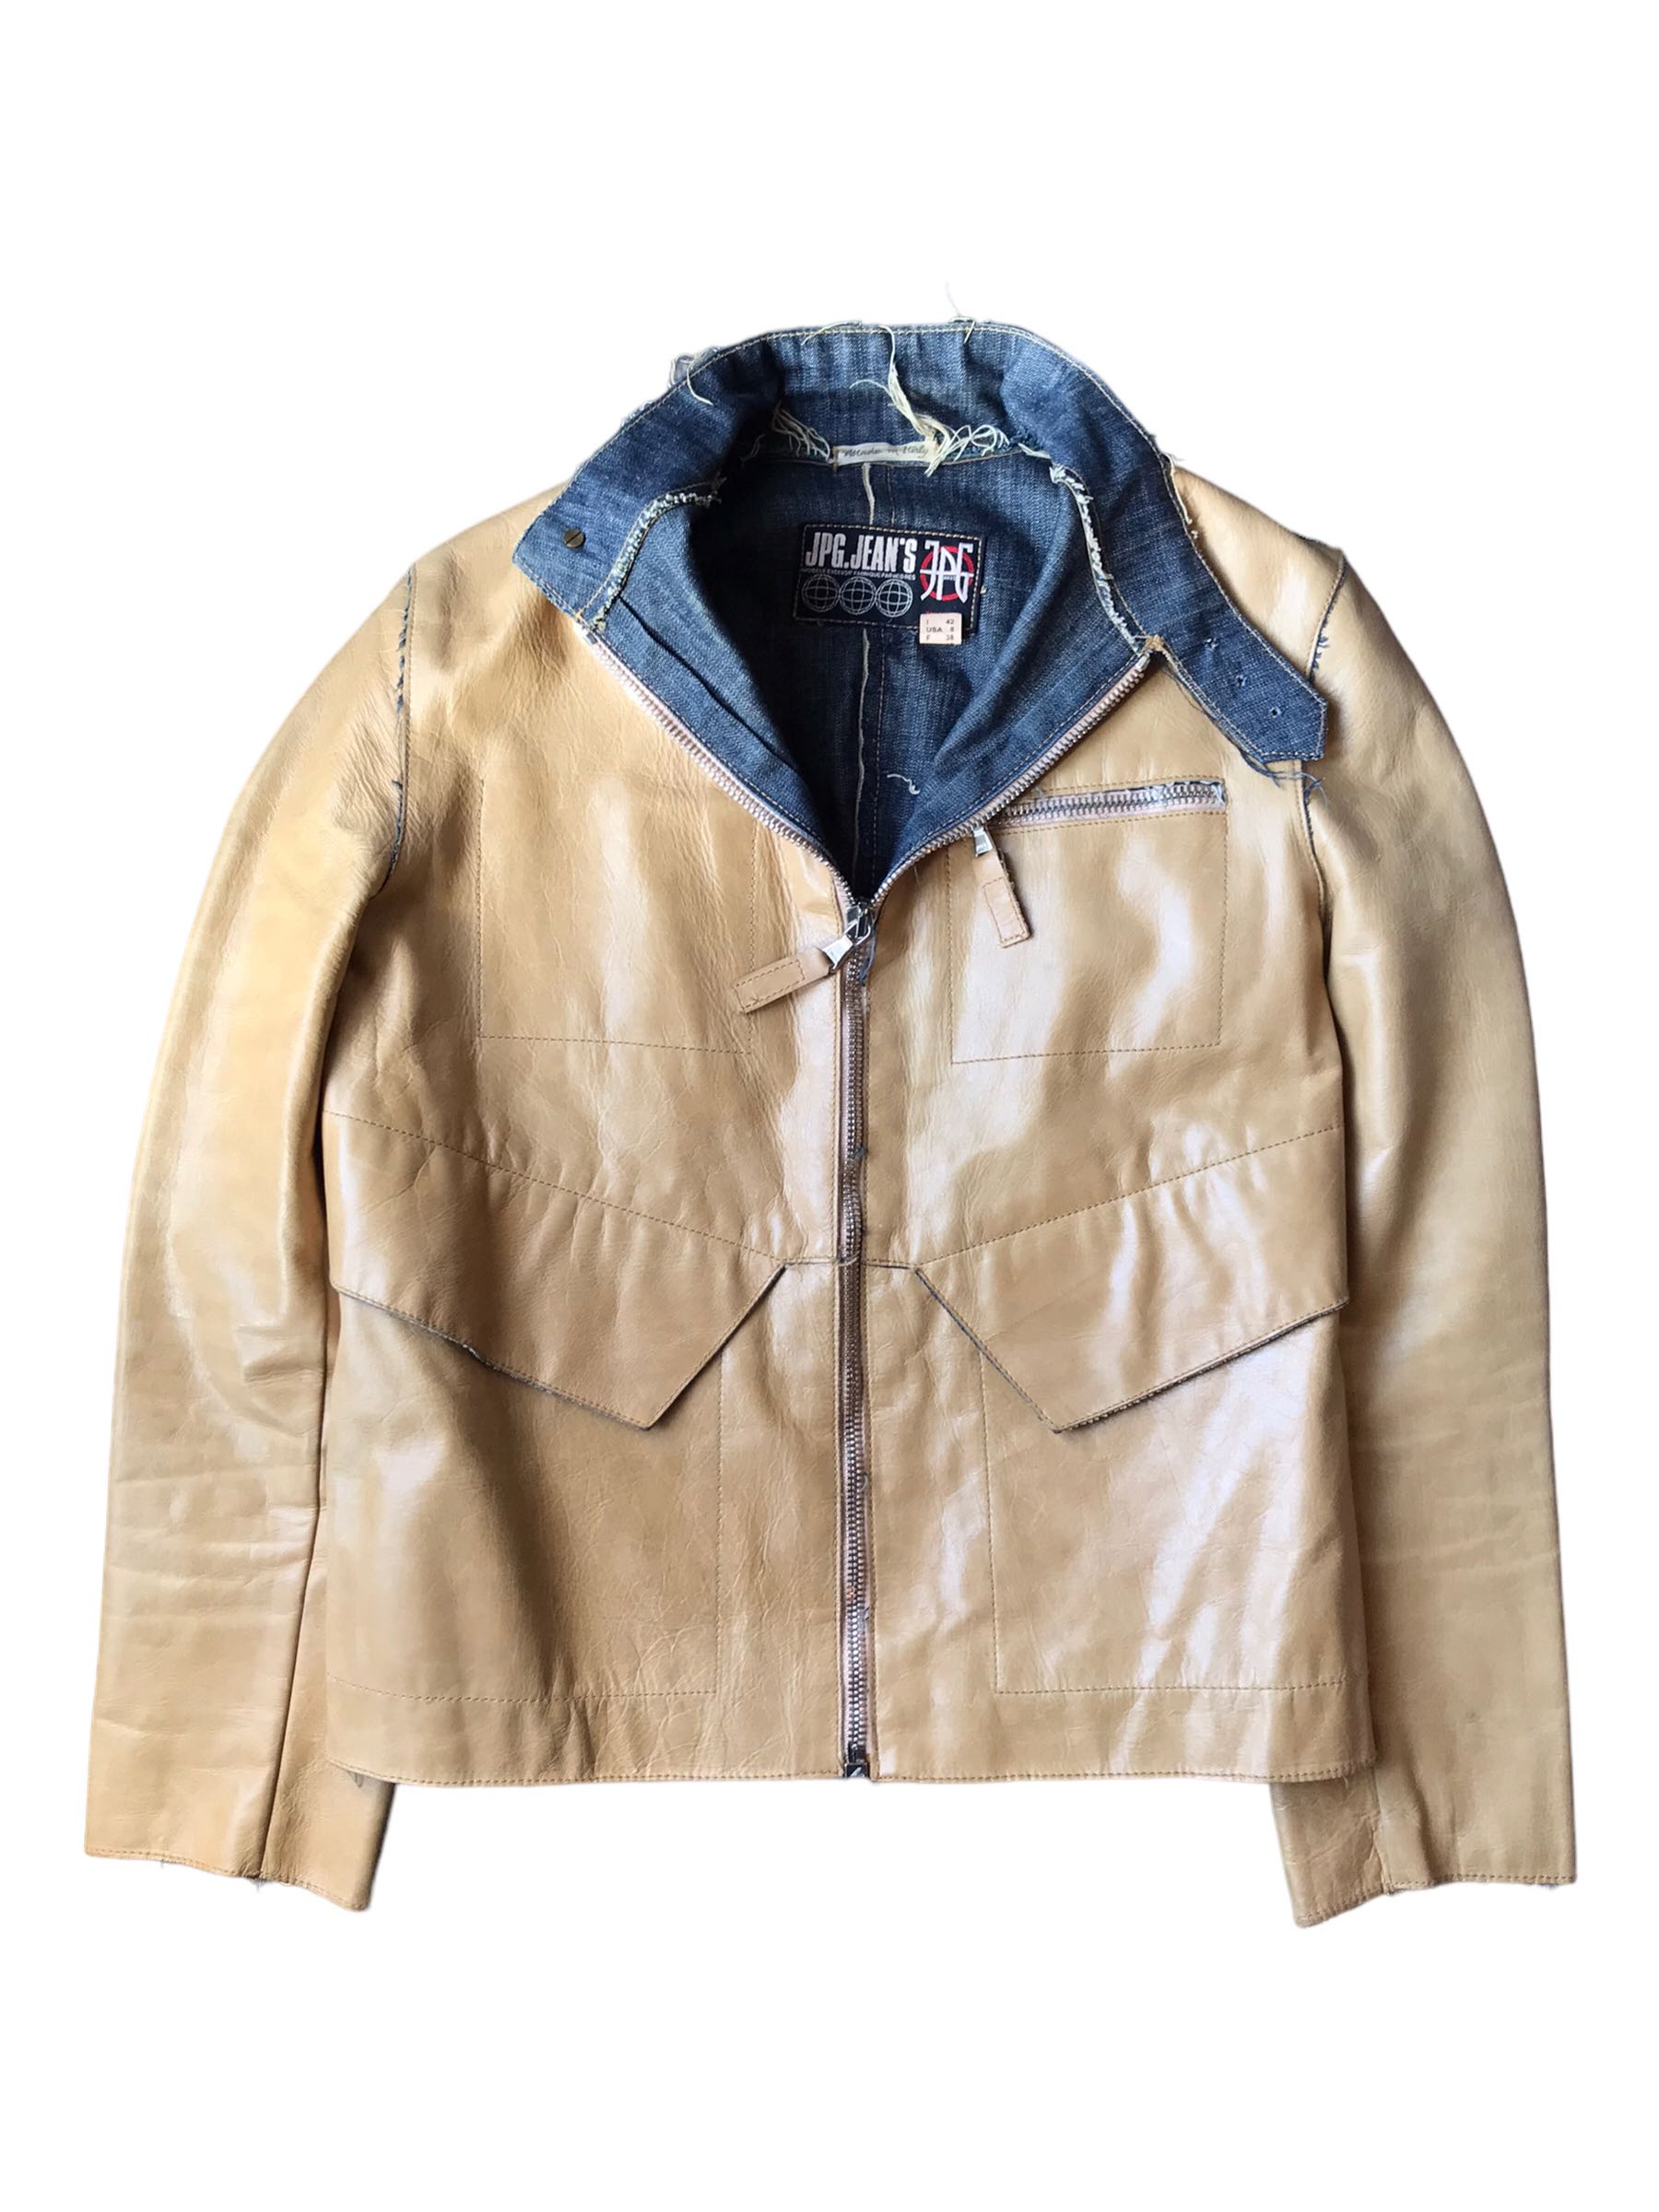 Jean Paul Gaultier leather and denim jacket (like Travis Scott Astroworld )